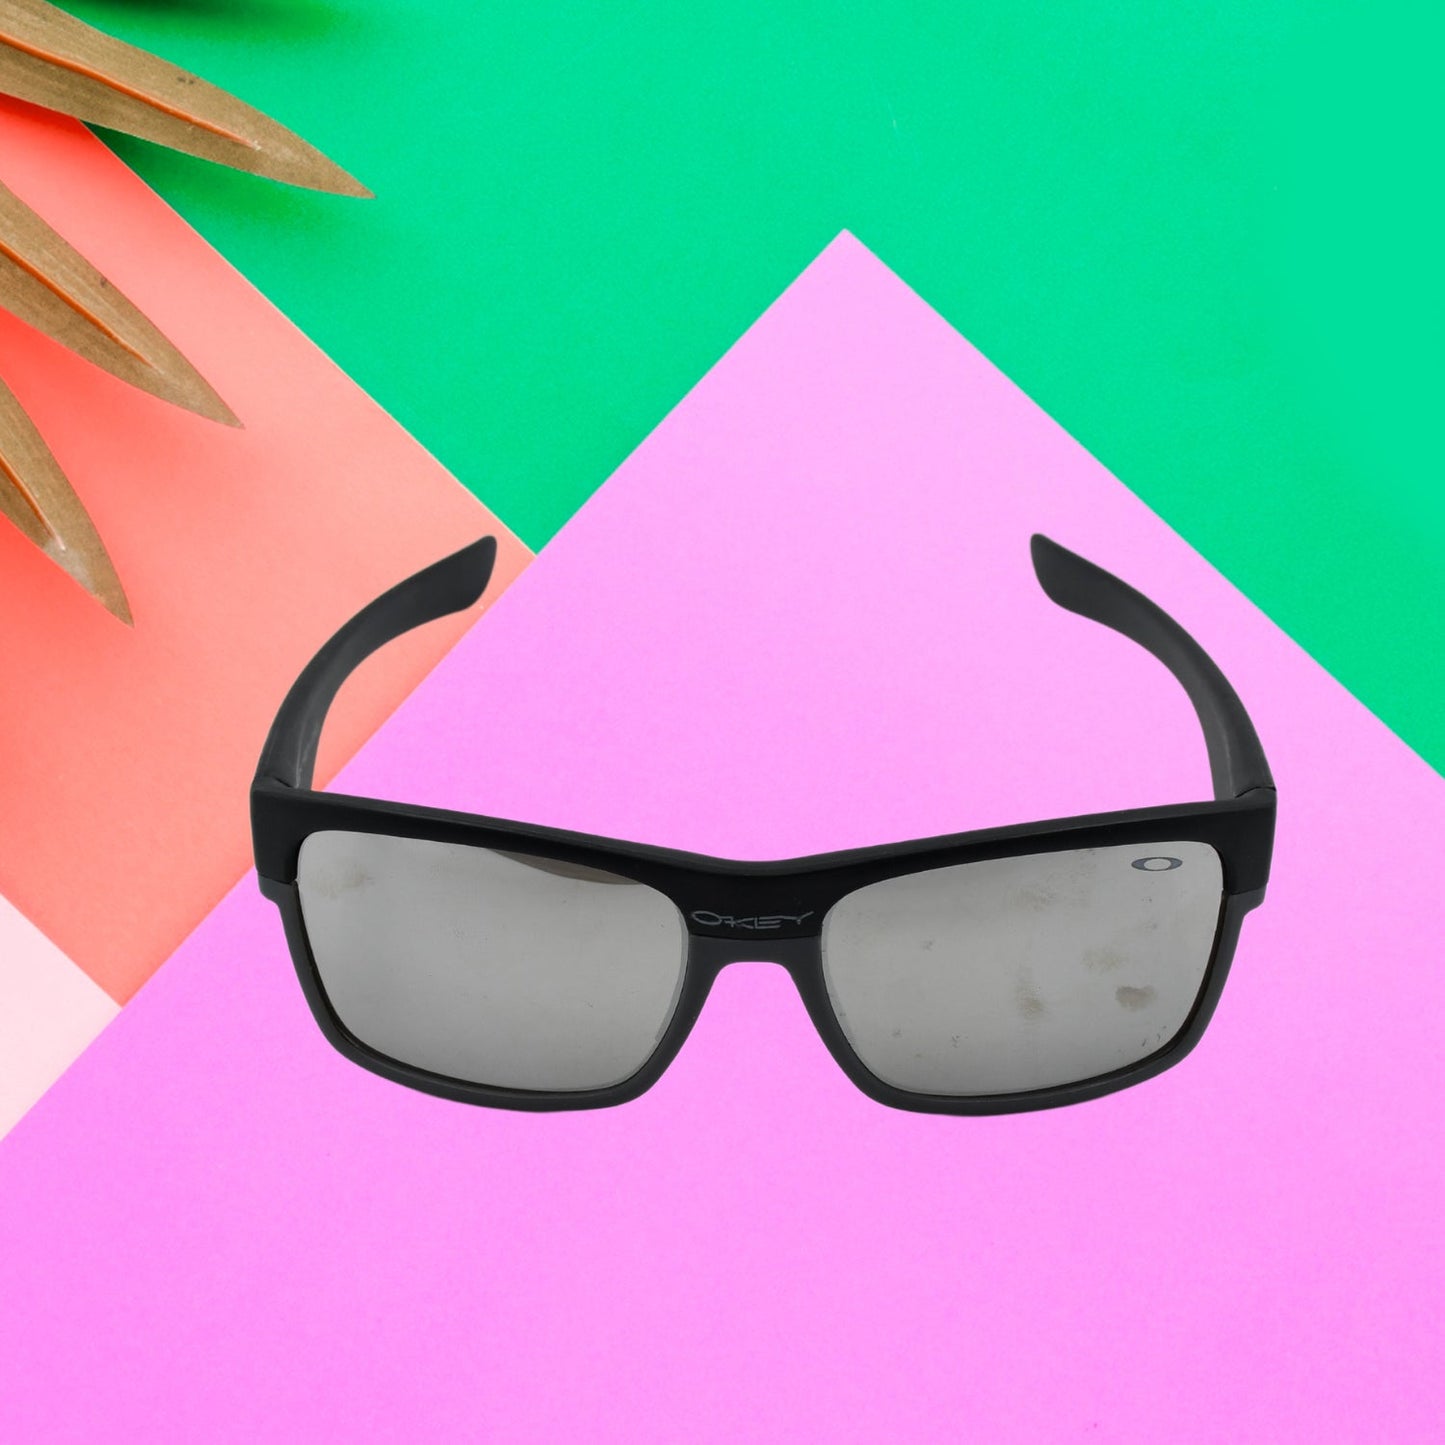 7759 UV Protected Clear Lens Square Sunglasses, Protect Sunglasses | Clear Vision Glasses for Driving Car & Bike Riding Black Glasses for Men and Women